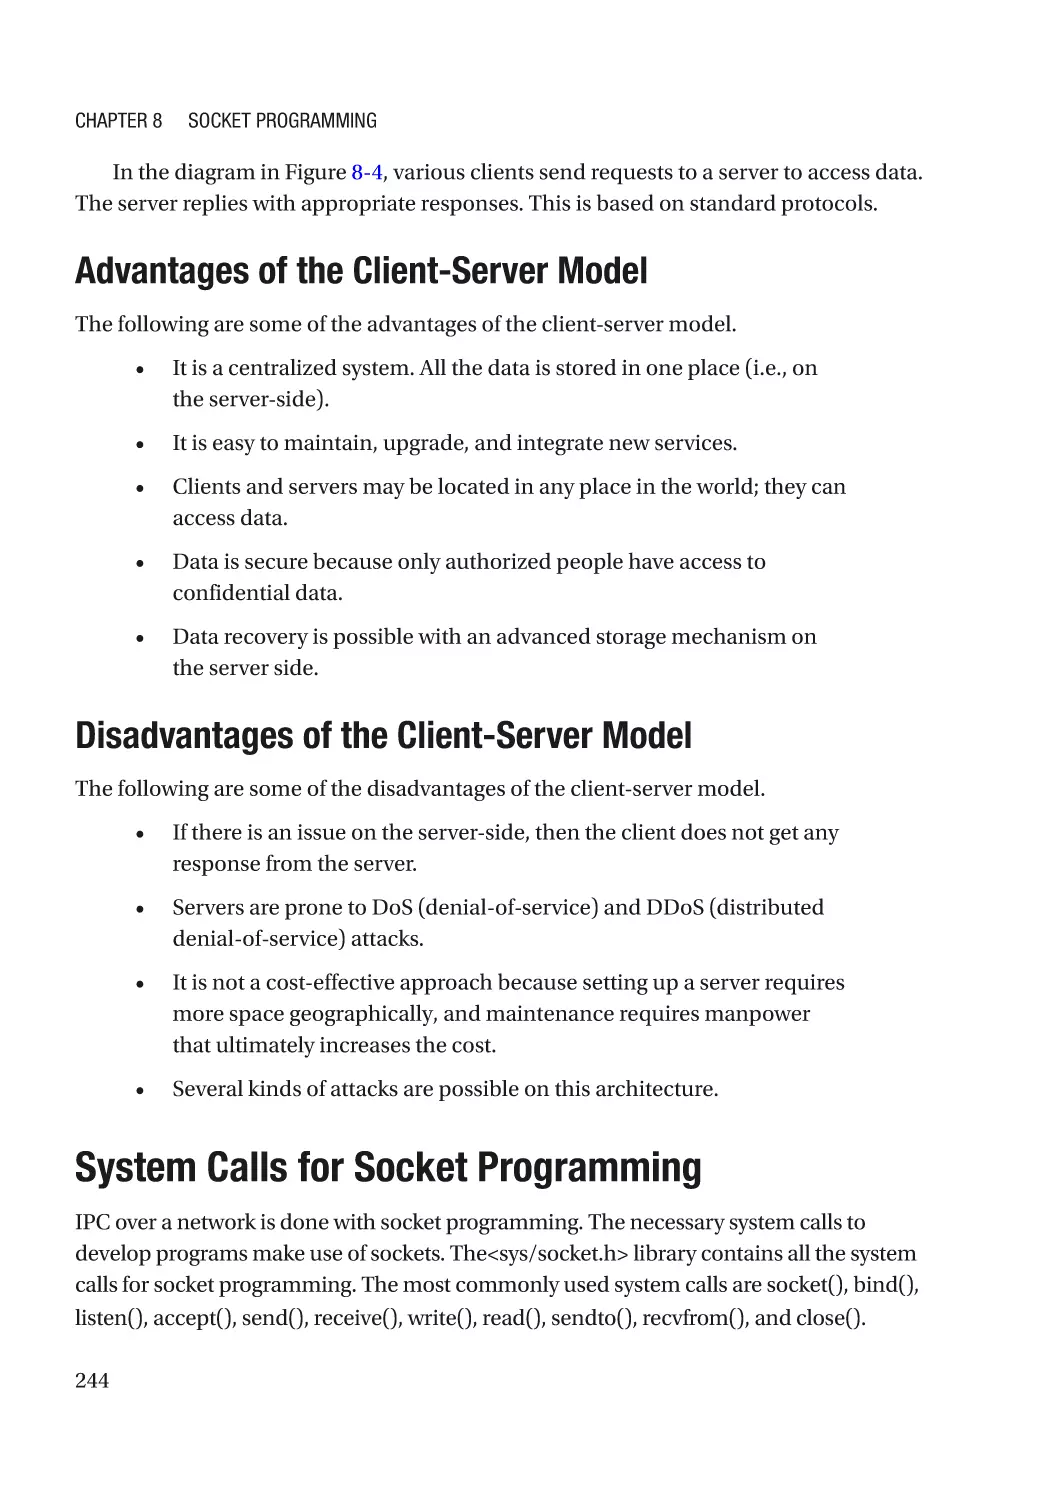 Advantages of the Client-Server Model
Disadvantages of the Client-Server Model
System Calls for Socket Programming